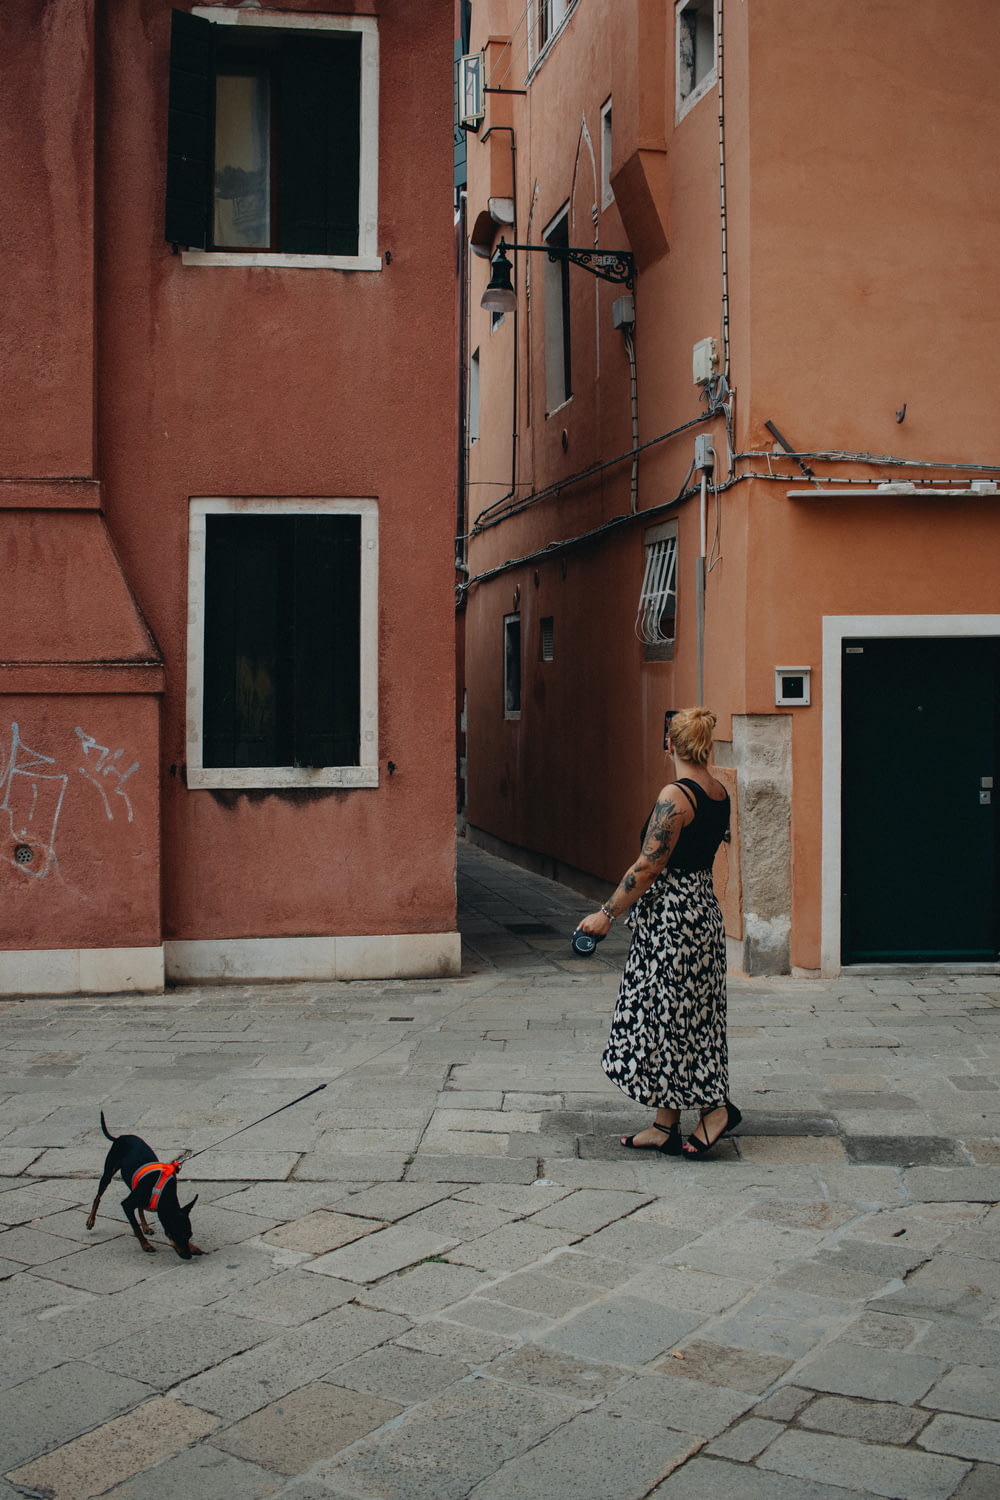 a woman walking a dog on a city street